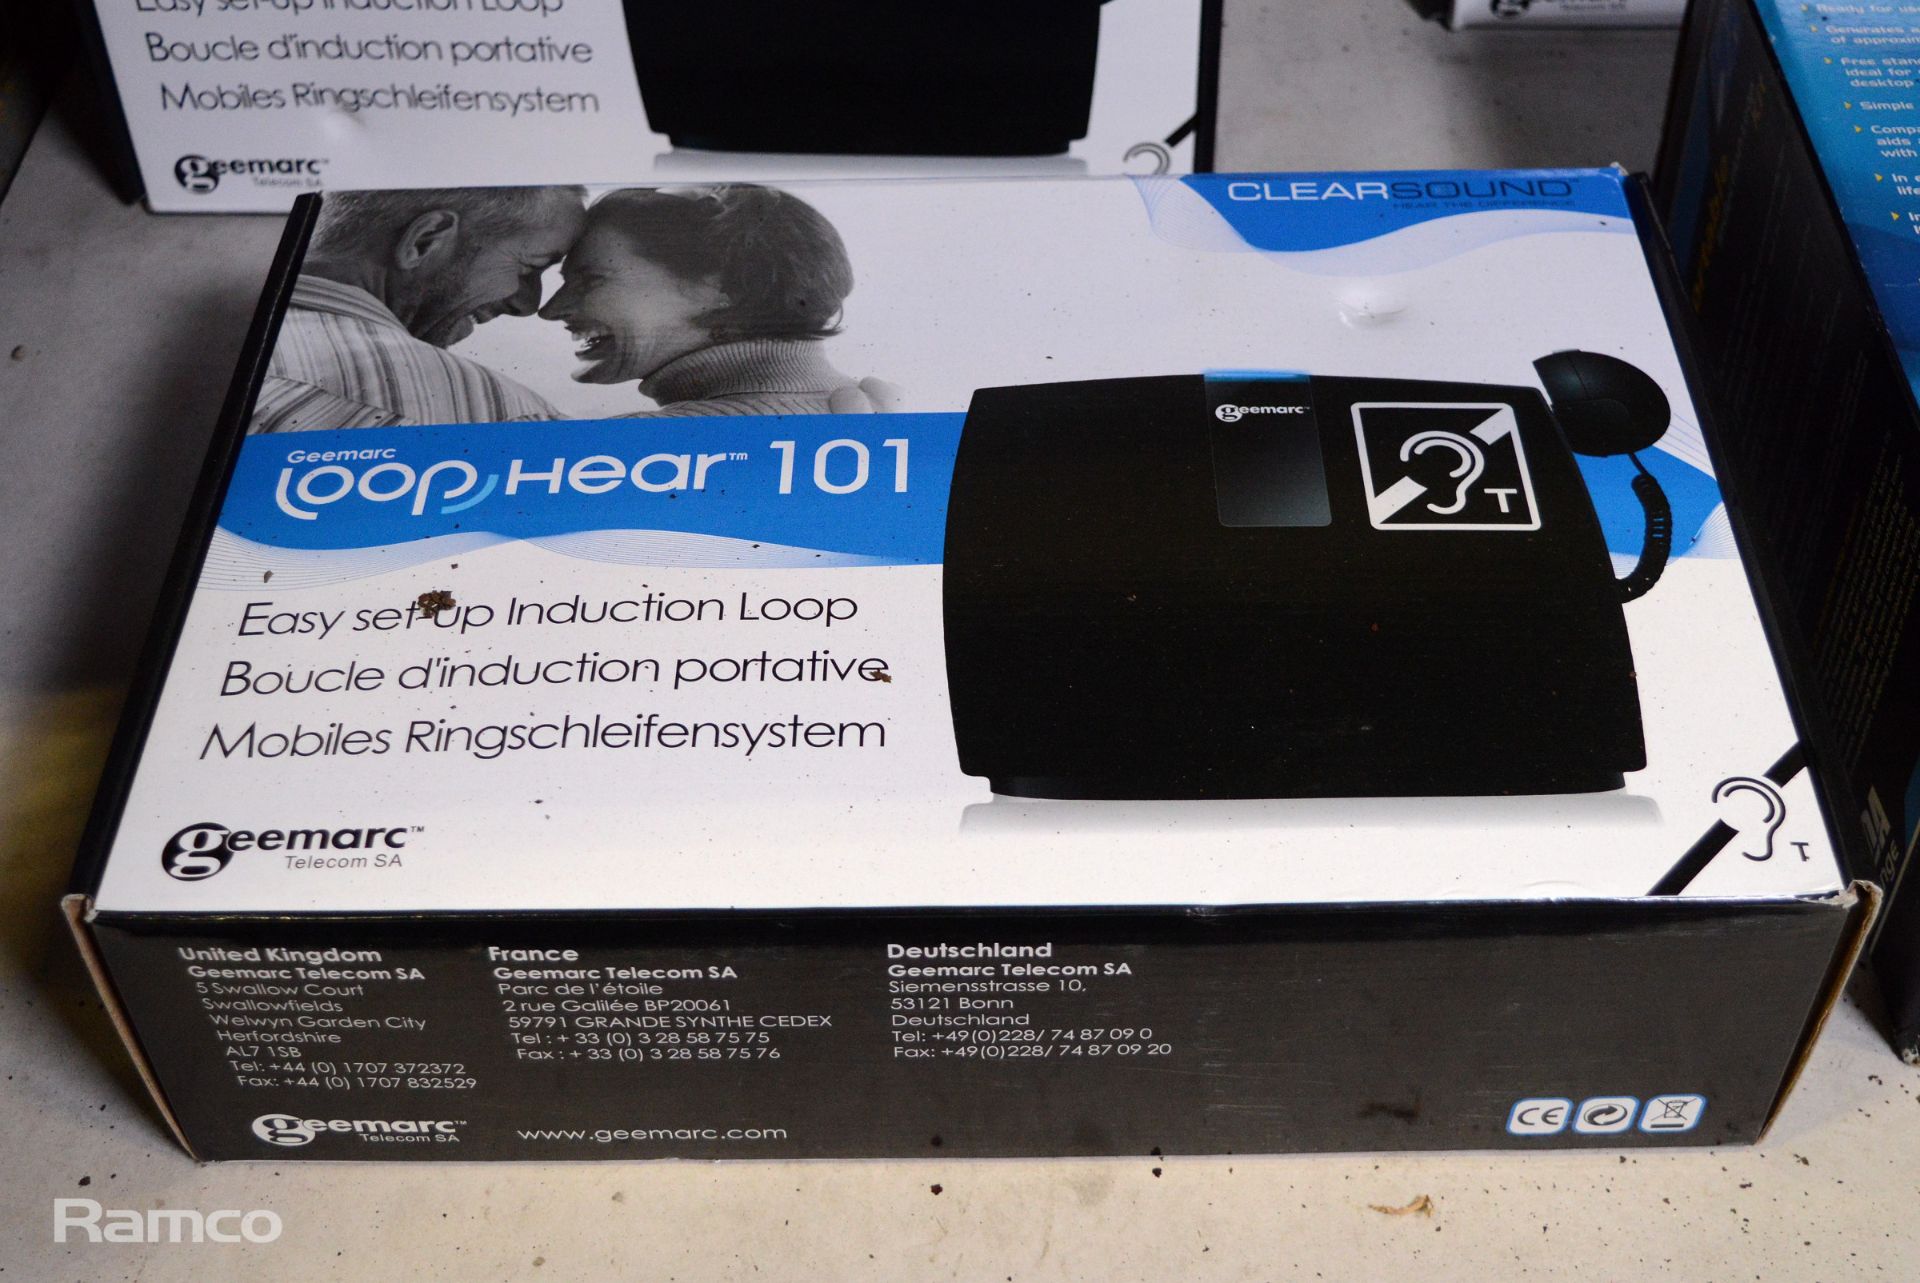 Induction Loop Kits - Geemarc Loophear 101 & PDA Range Portable Induction Loop Kit - Image 2 of 4